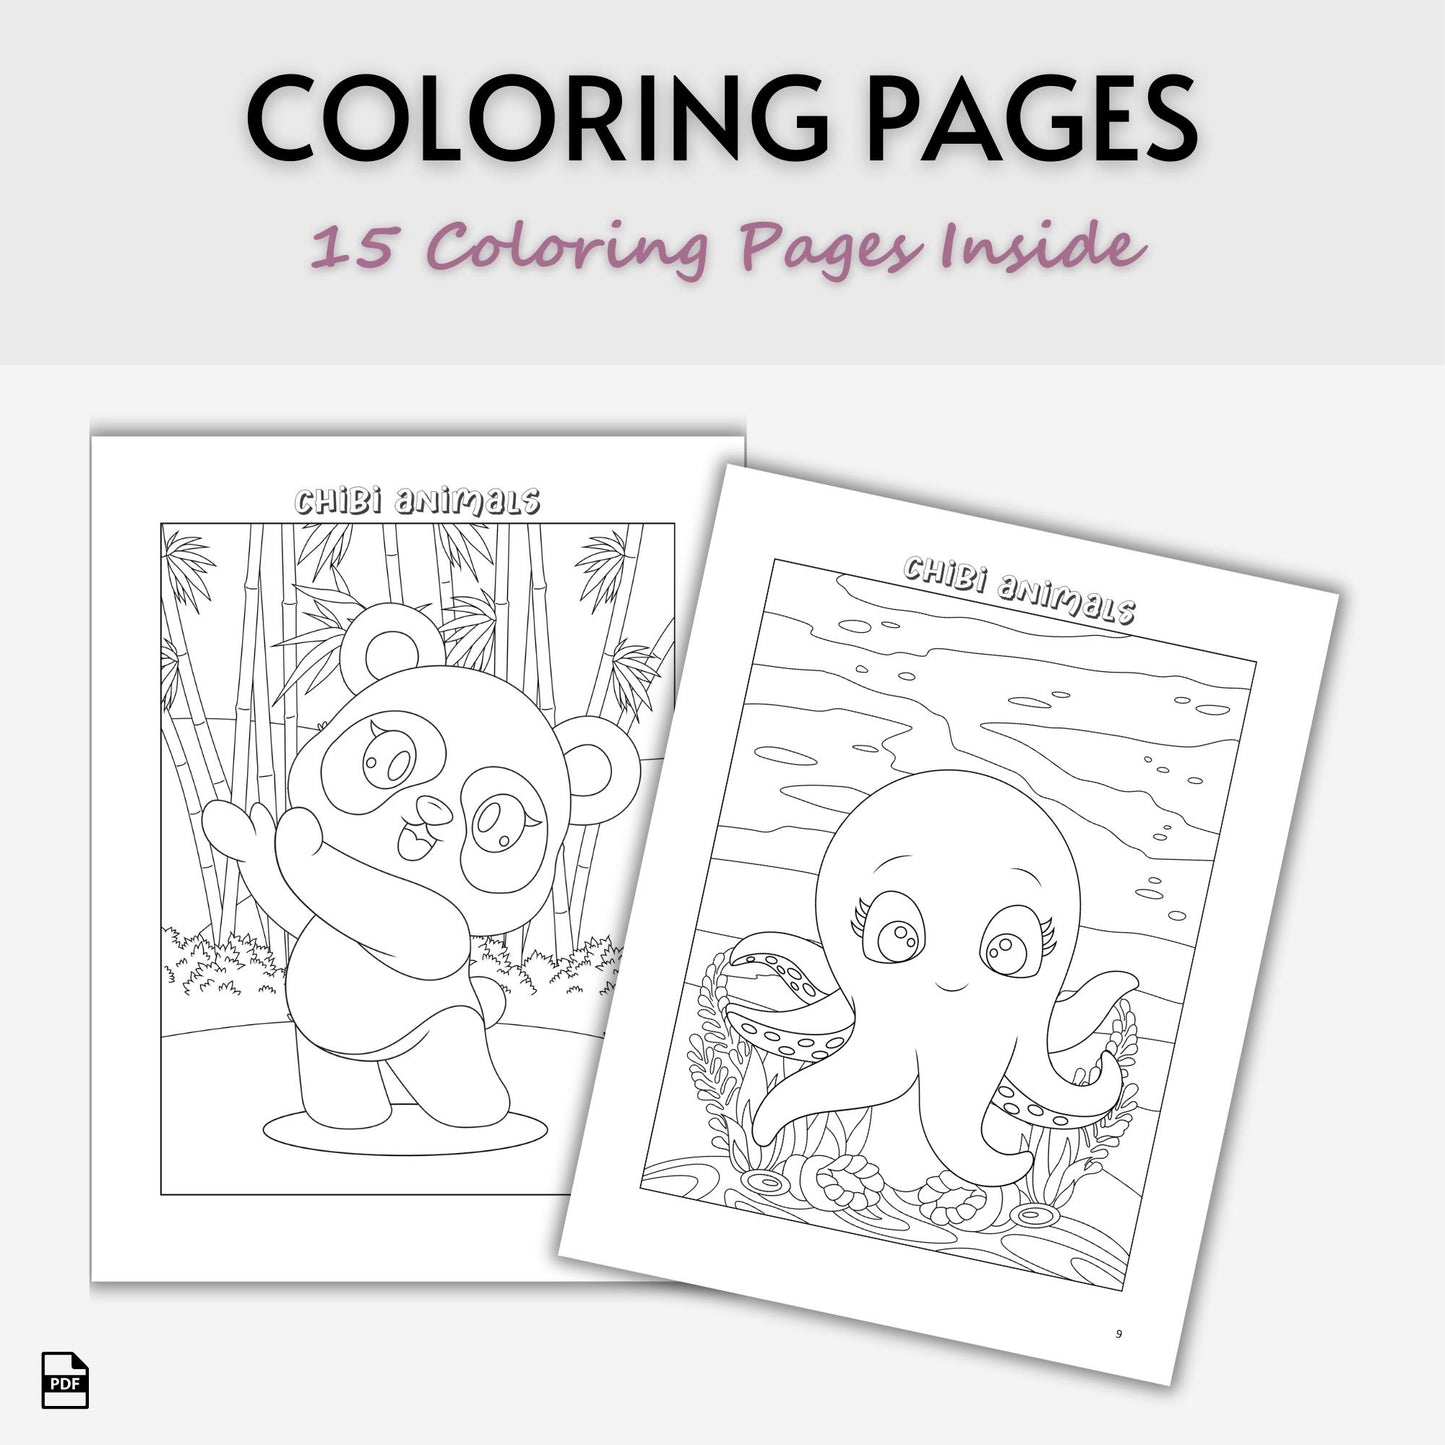 Chibi Animals Coloring Book